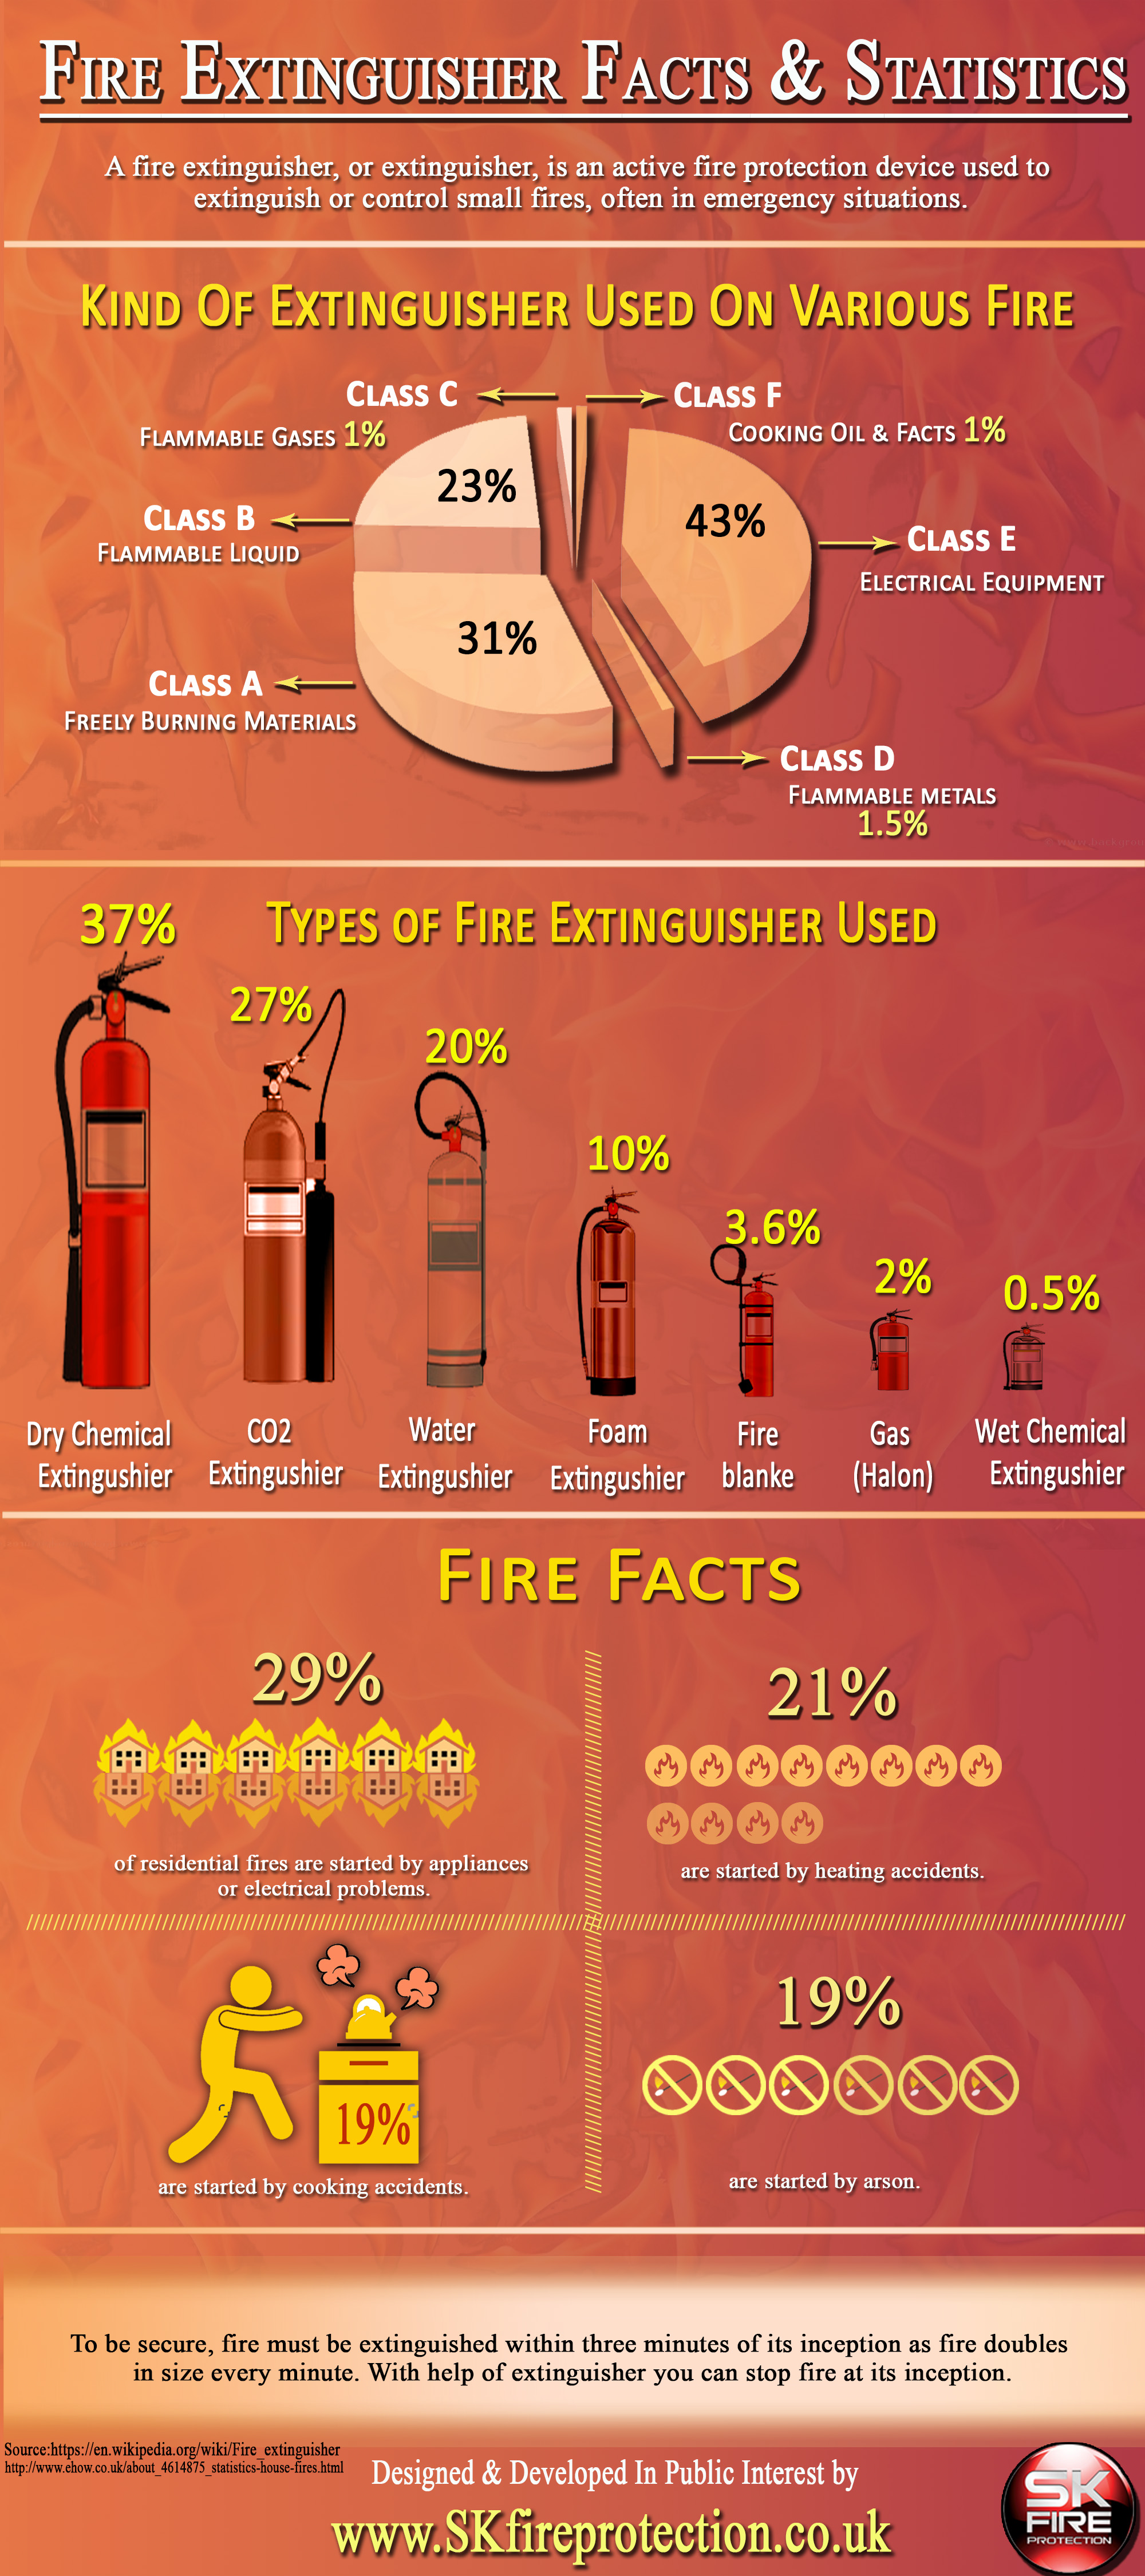 Fire Extinguisher Facts & Statistics